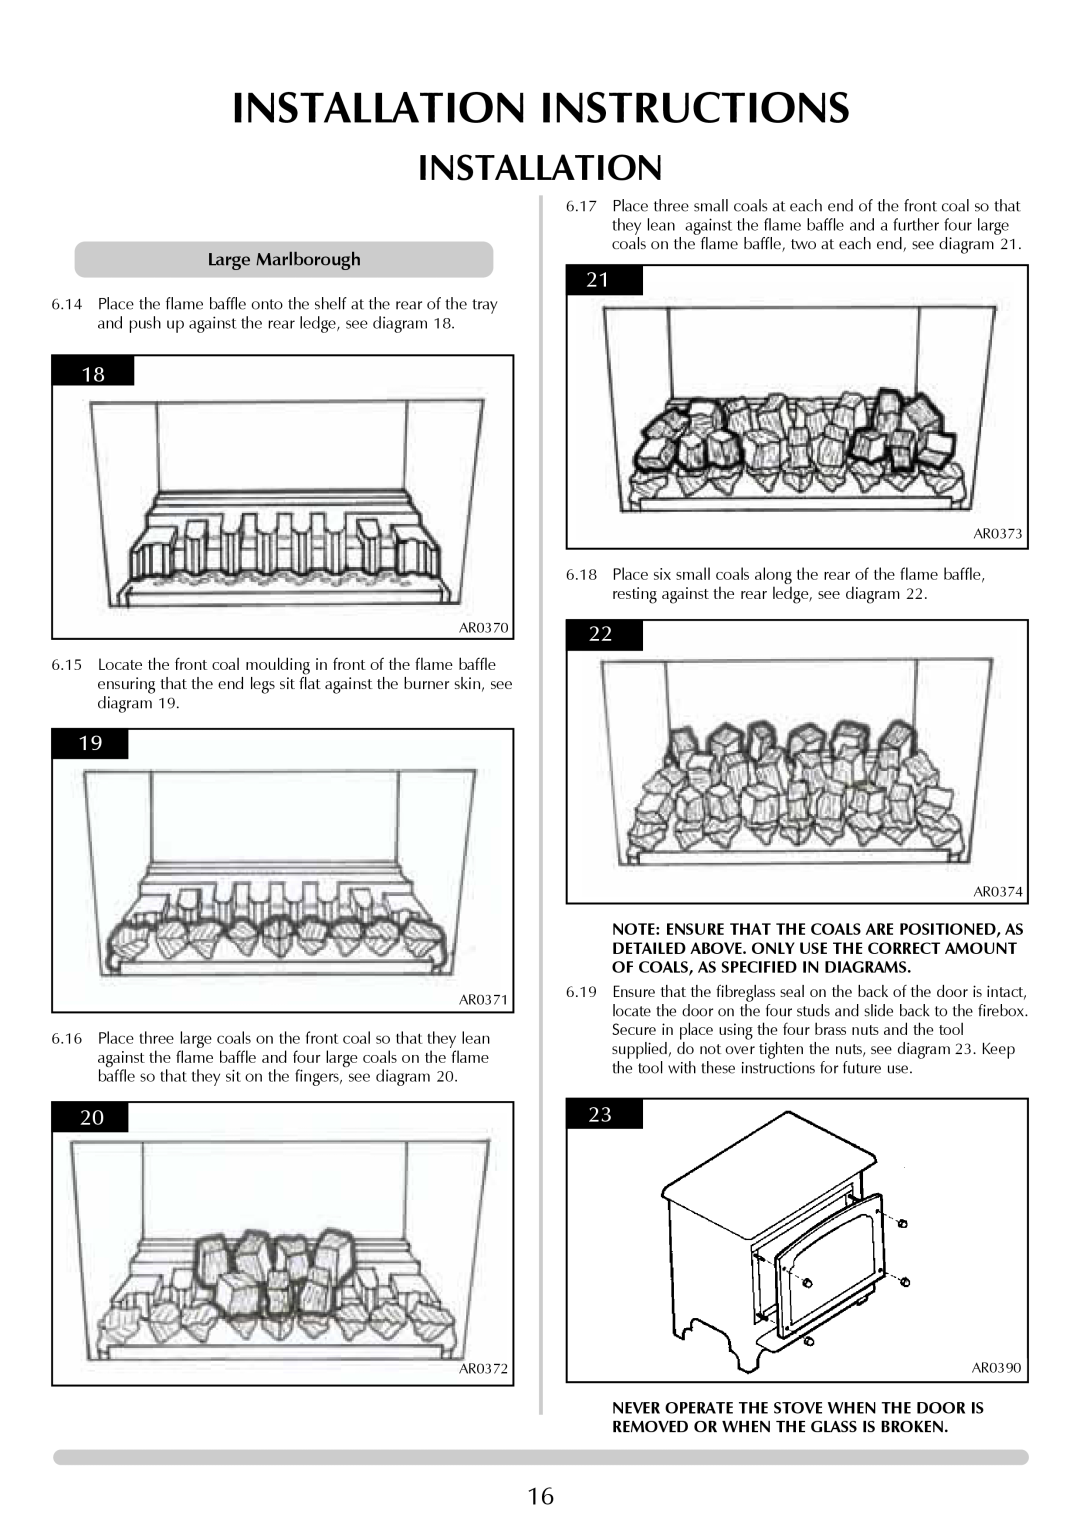 Stovax Coal Effect Stove Range manual Installation Instructions, Large Marlborough, AR0370 